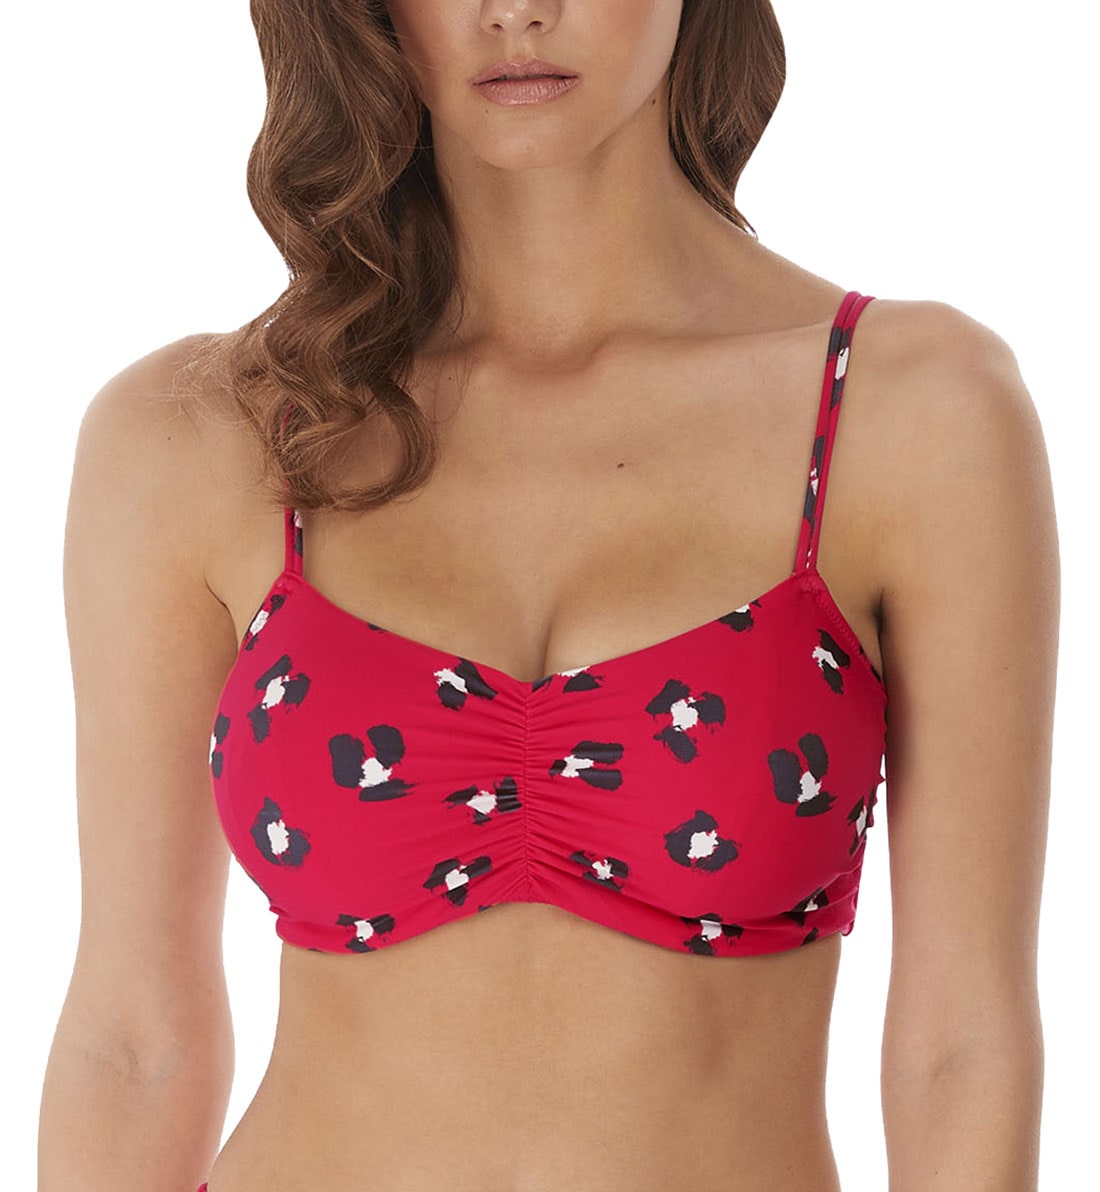 Freya Wildcat Convertible Concealed Underwire Bralette Bikini Top (6882),30FF,Red - Red,30FF